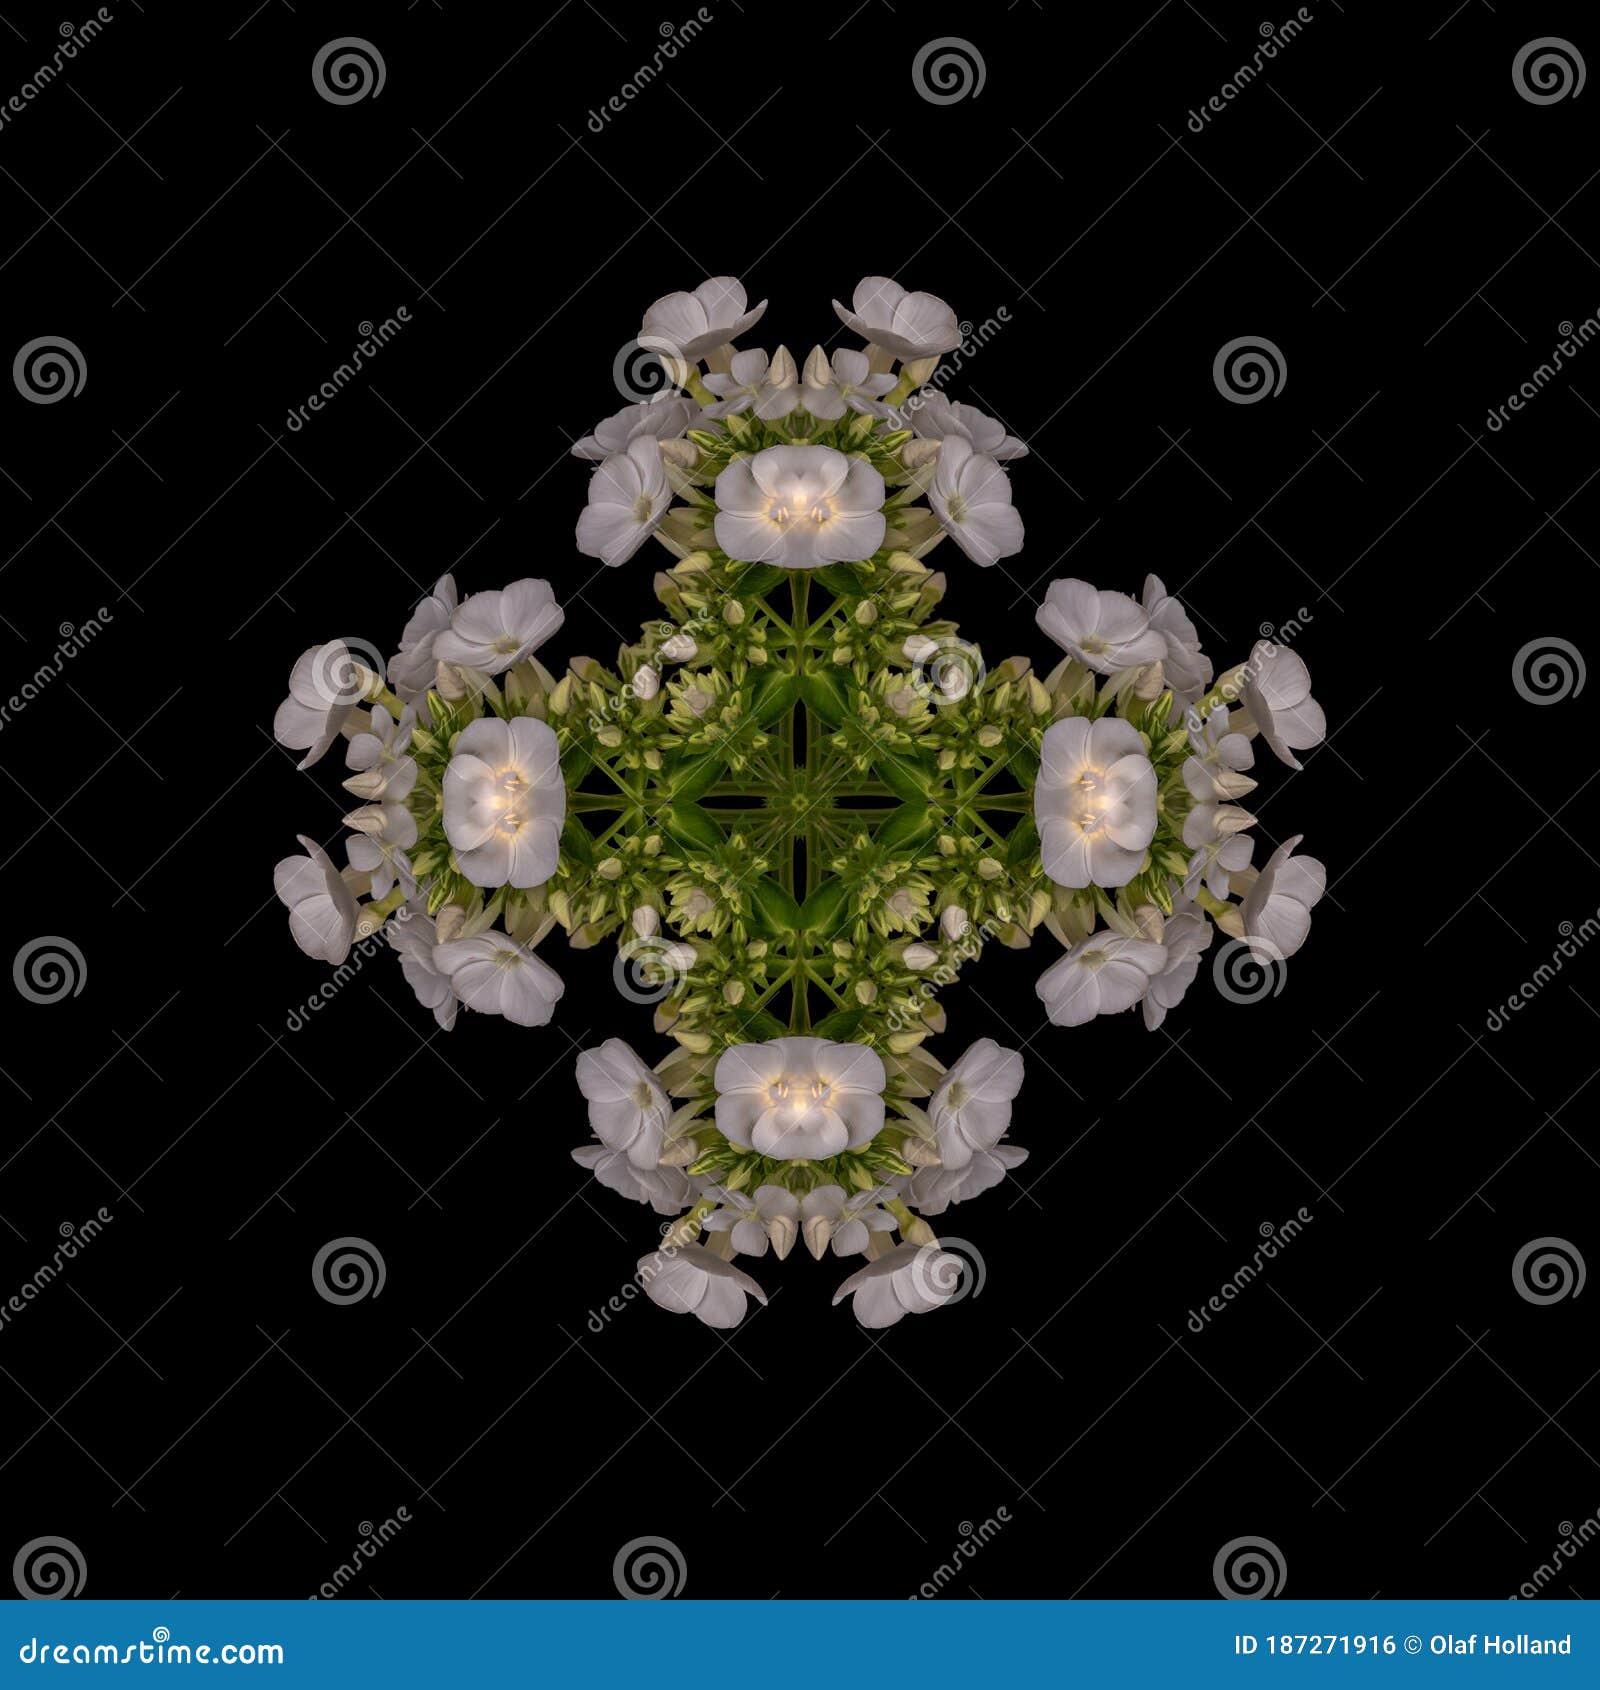 geometrical symmetrical ornament made of macros of white green yellow phloxs